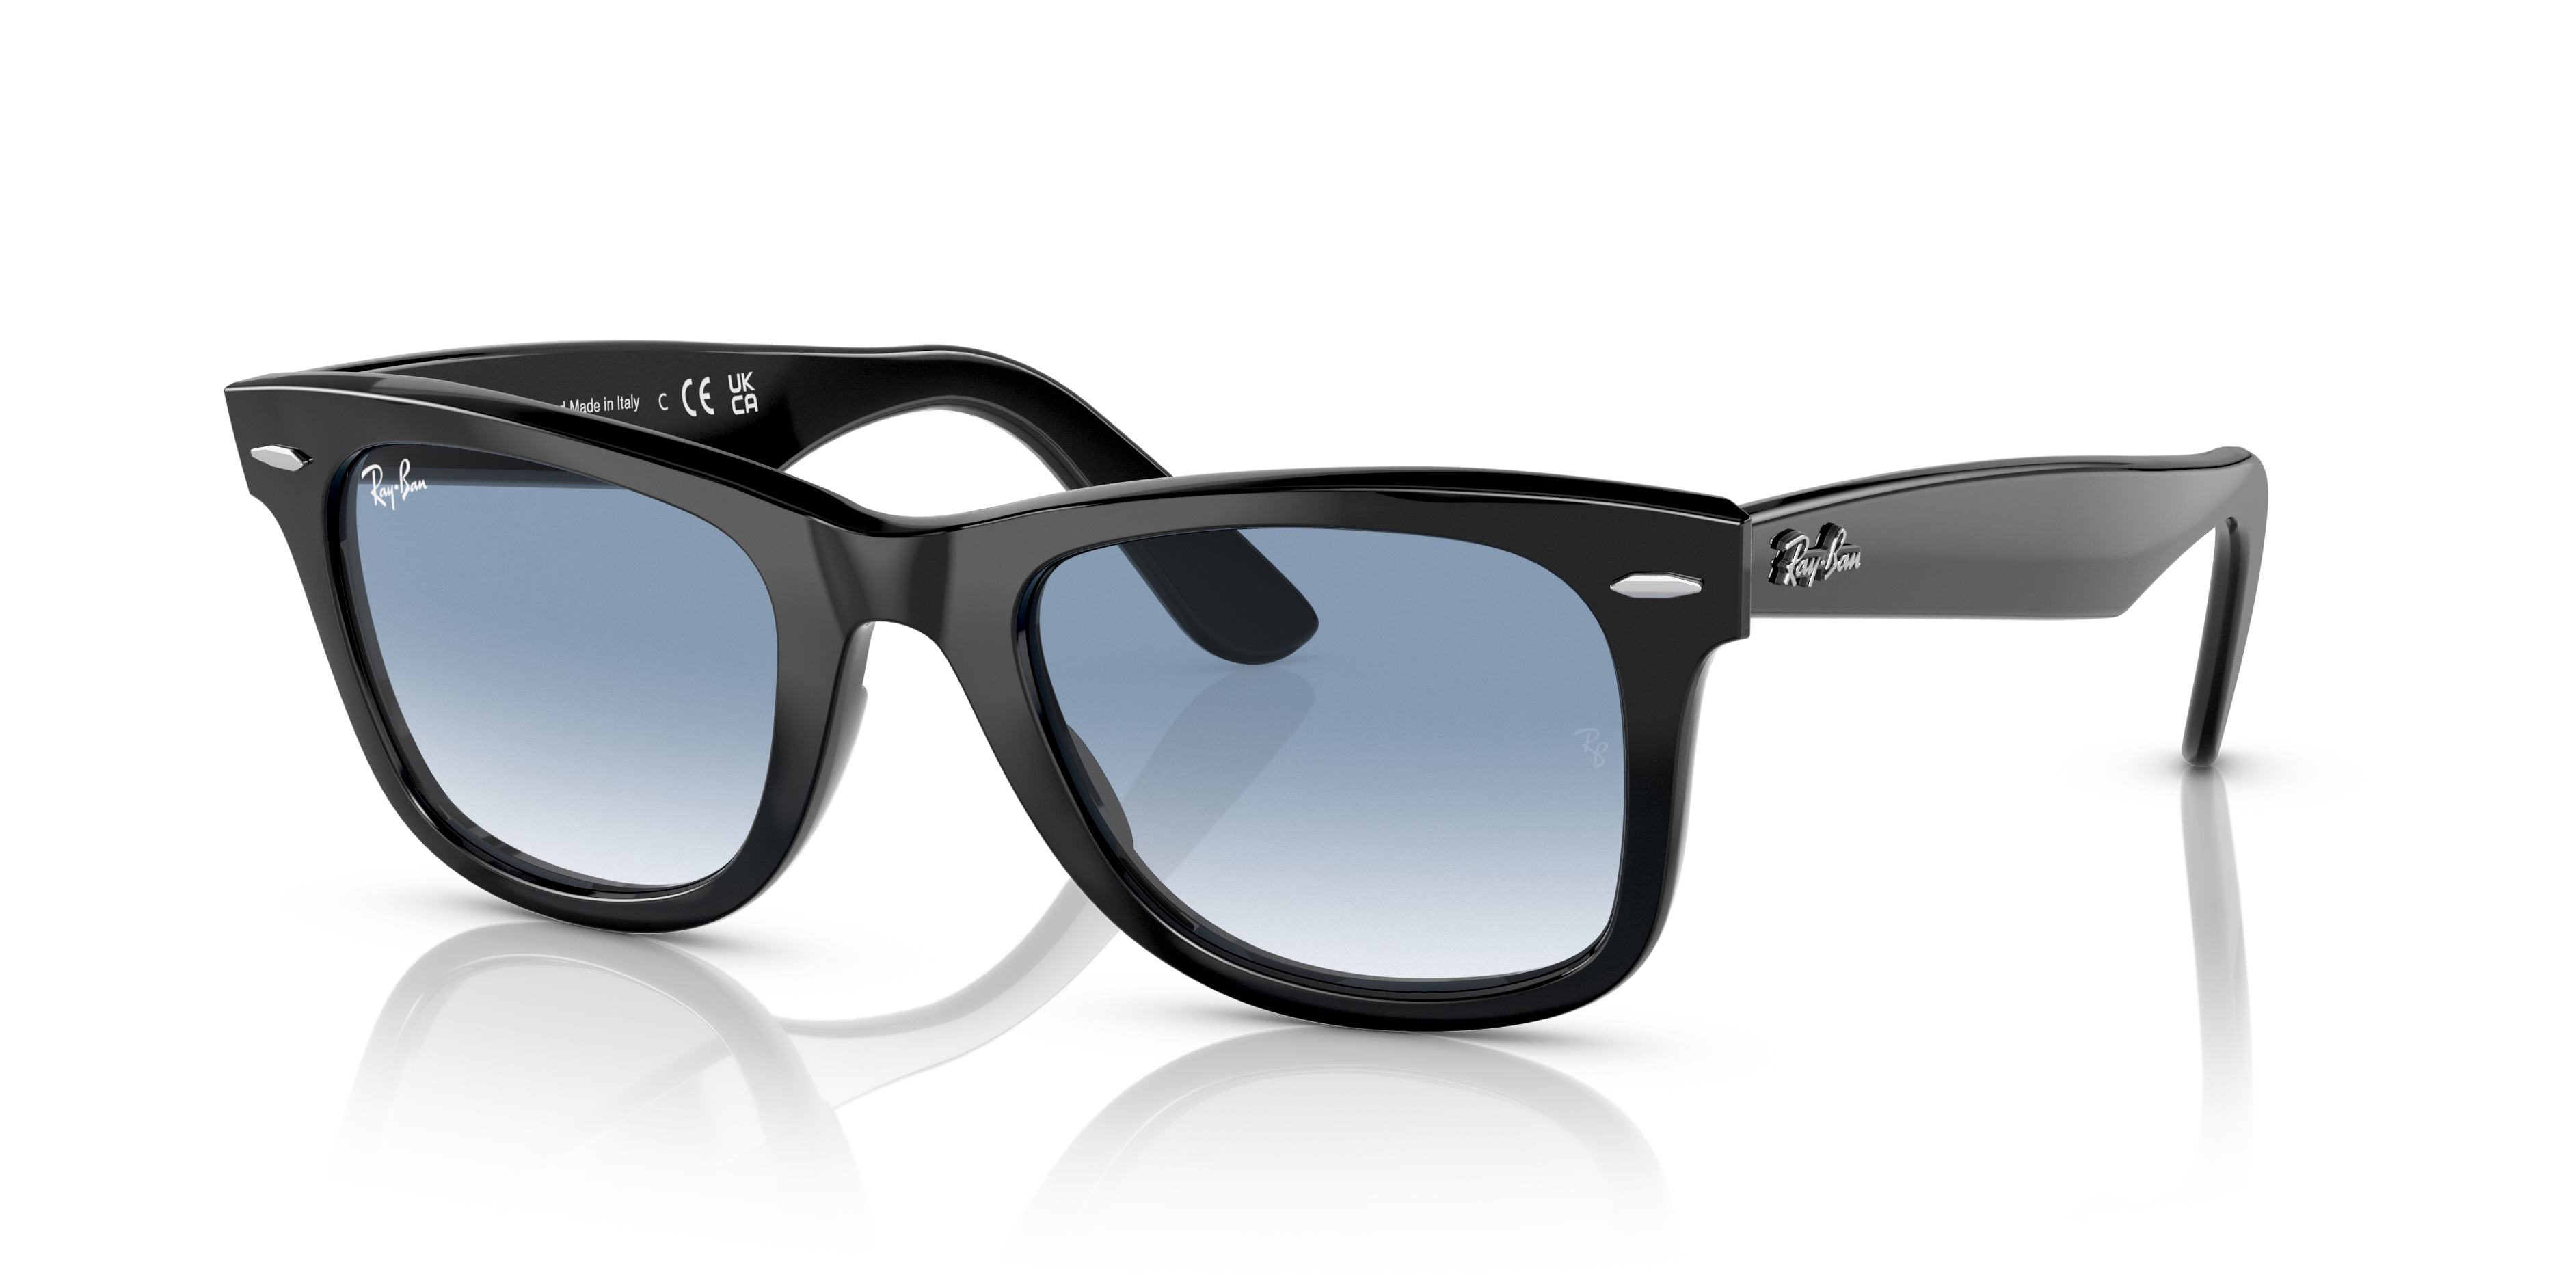 ORIGINAL WAYFARER CLASSIC Sunglasses in Black and Blue RB2140F Ray-Ban®  US